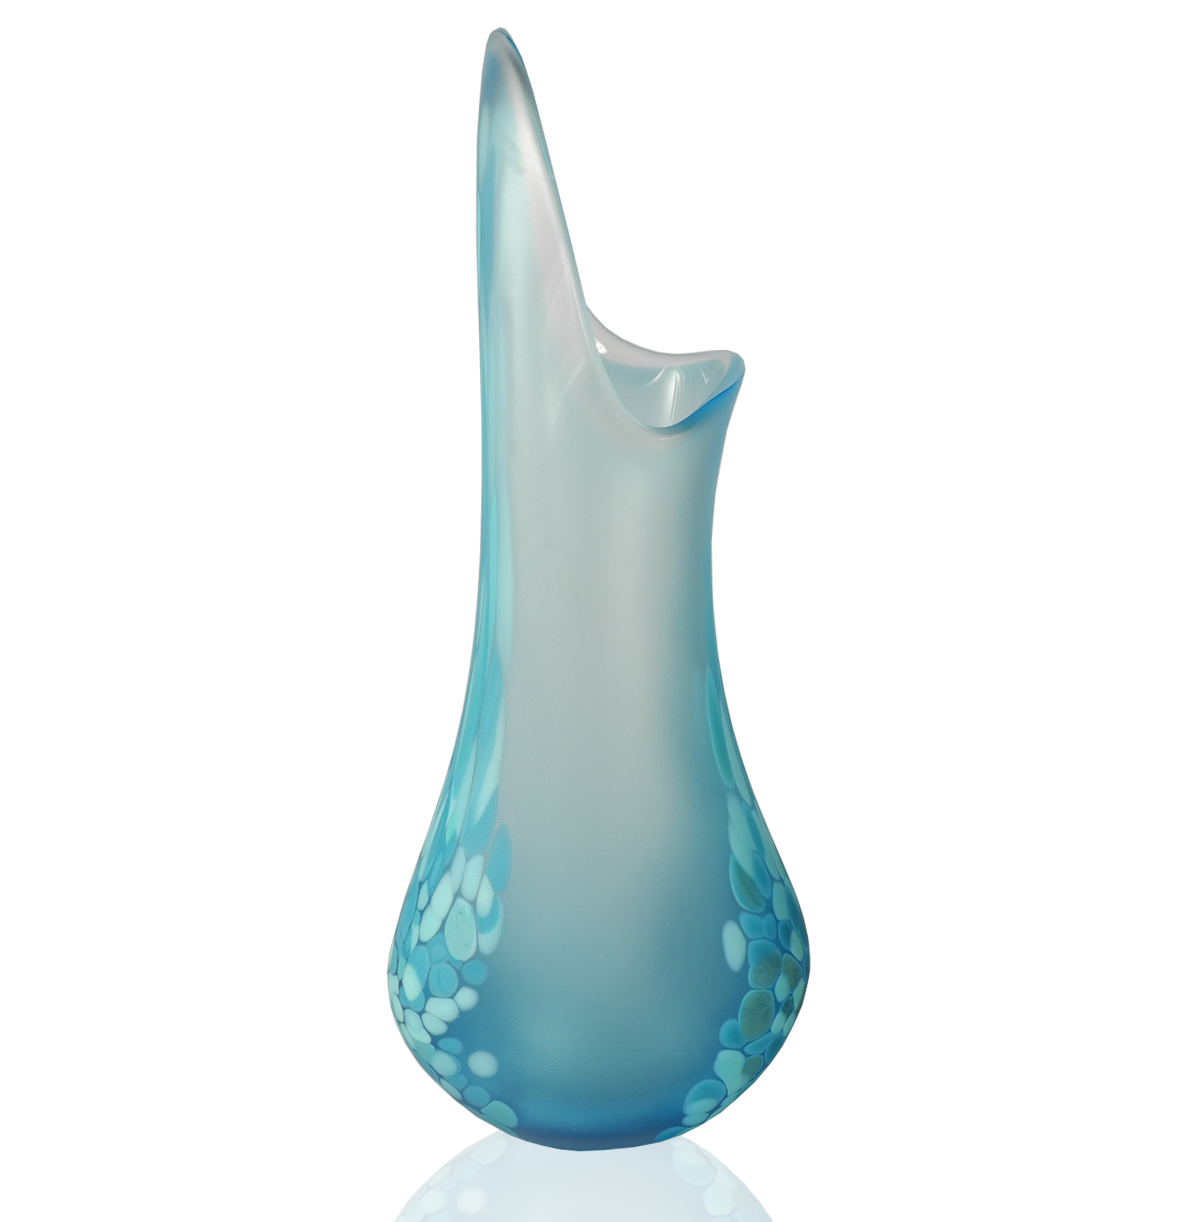 Bright Flava Vases - Glass Art - Kingston Glass Studio - Blown Glass - Glass Blowing